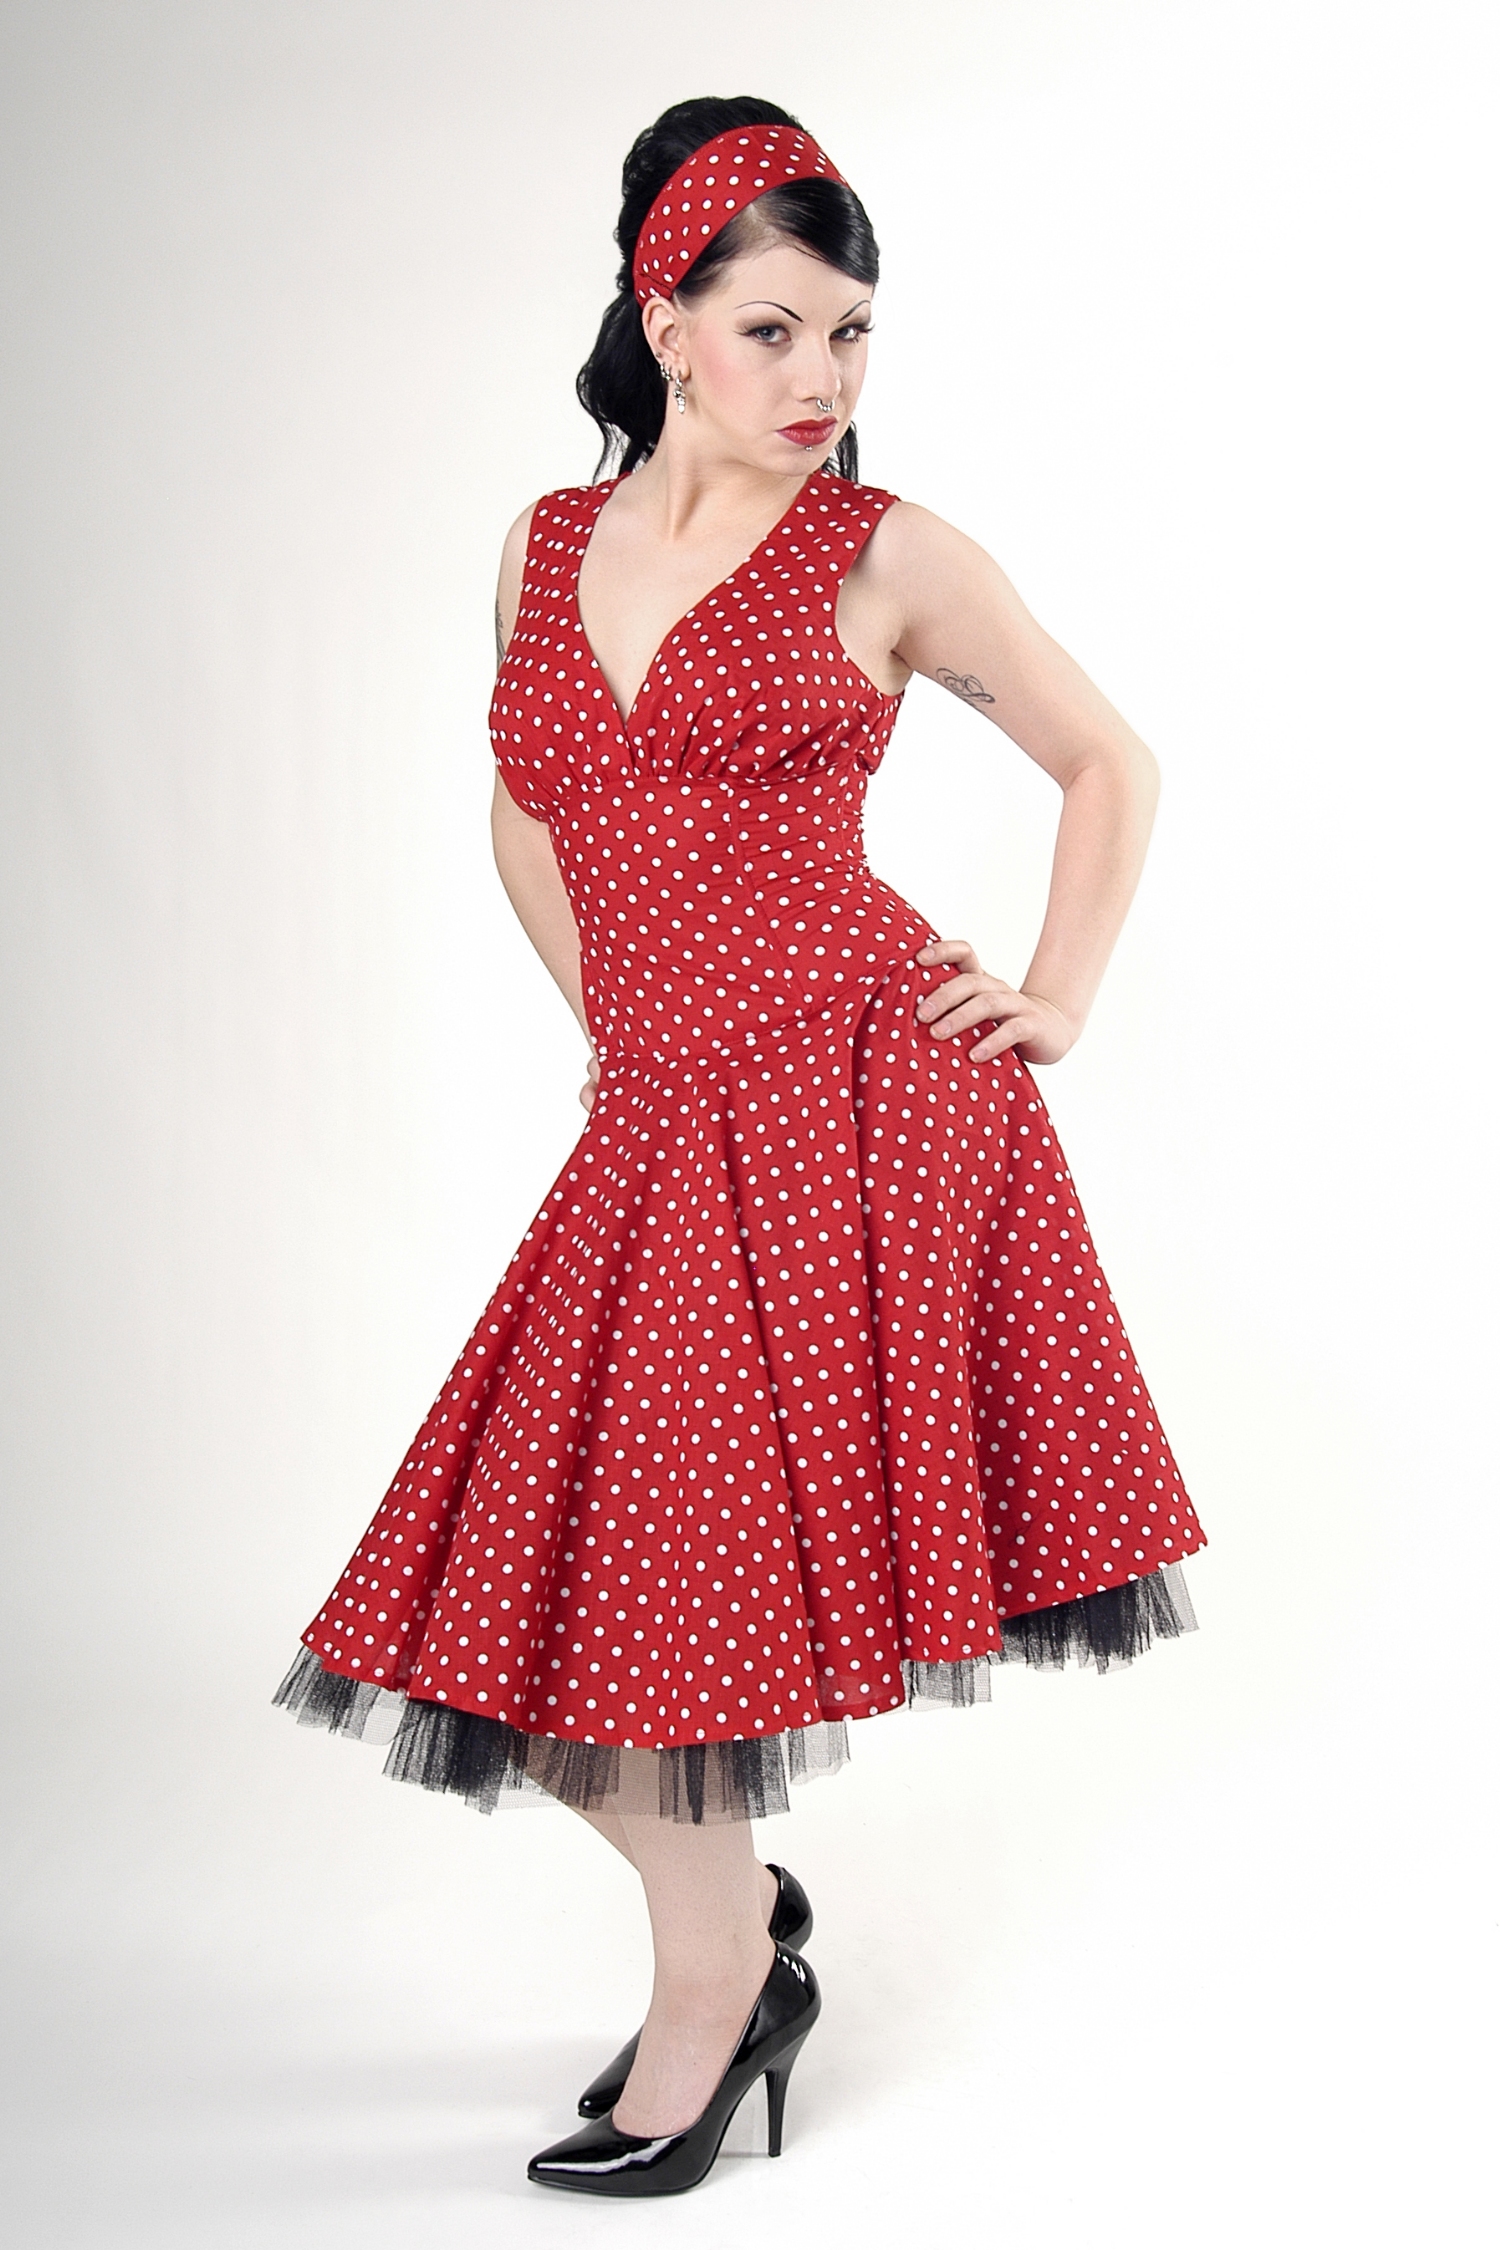 Sixteen red and black polka dot dresses,